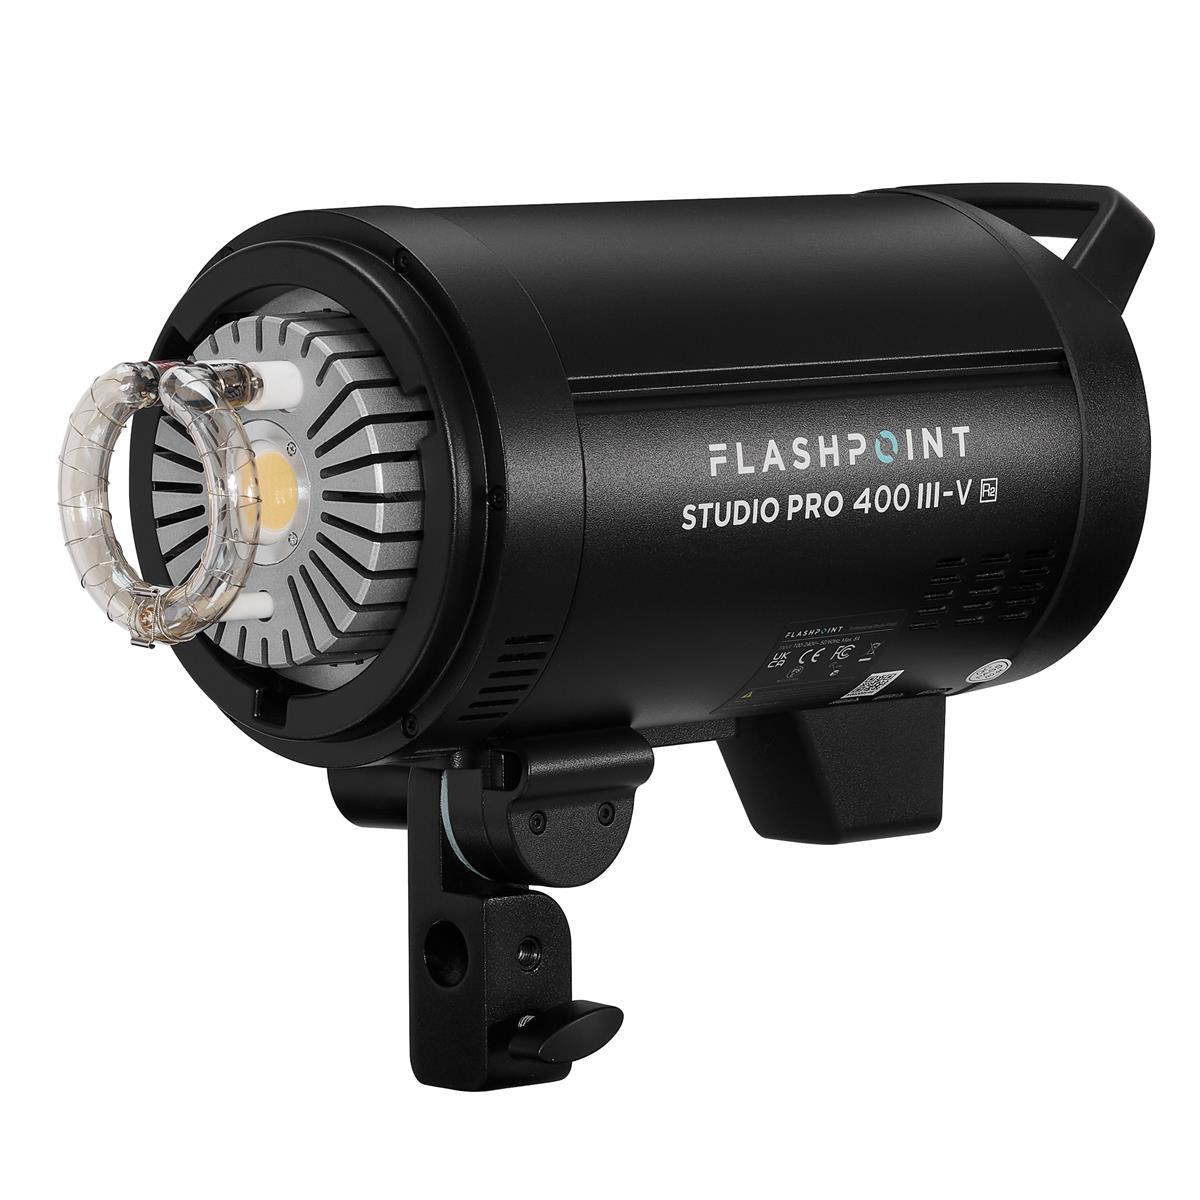 Image of Flashpoint Studio Pro 400 III-V 400W R2 Monolight Flash w/30W Lamp